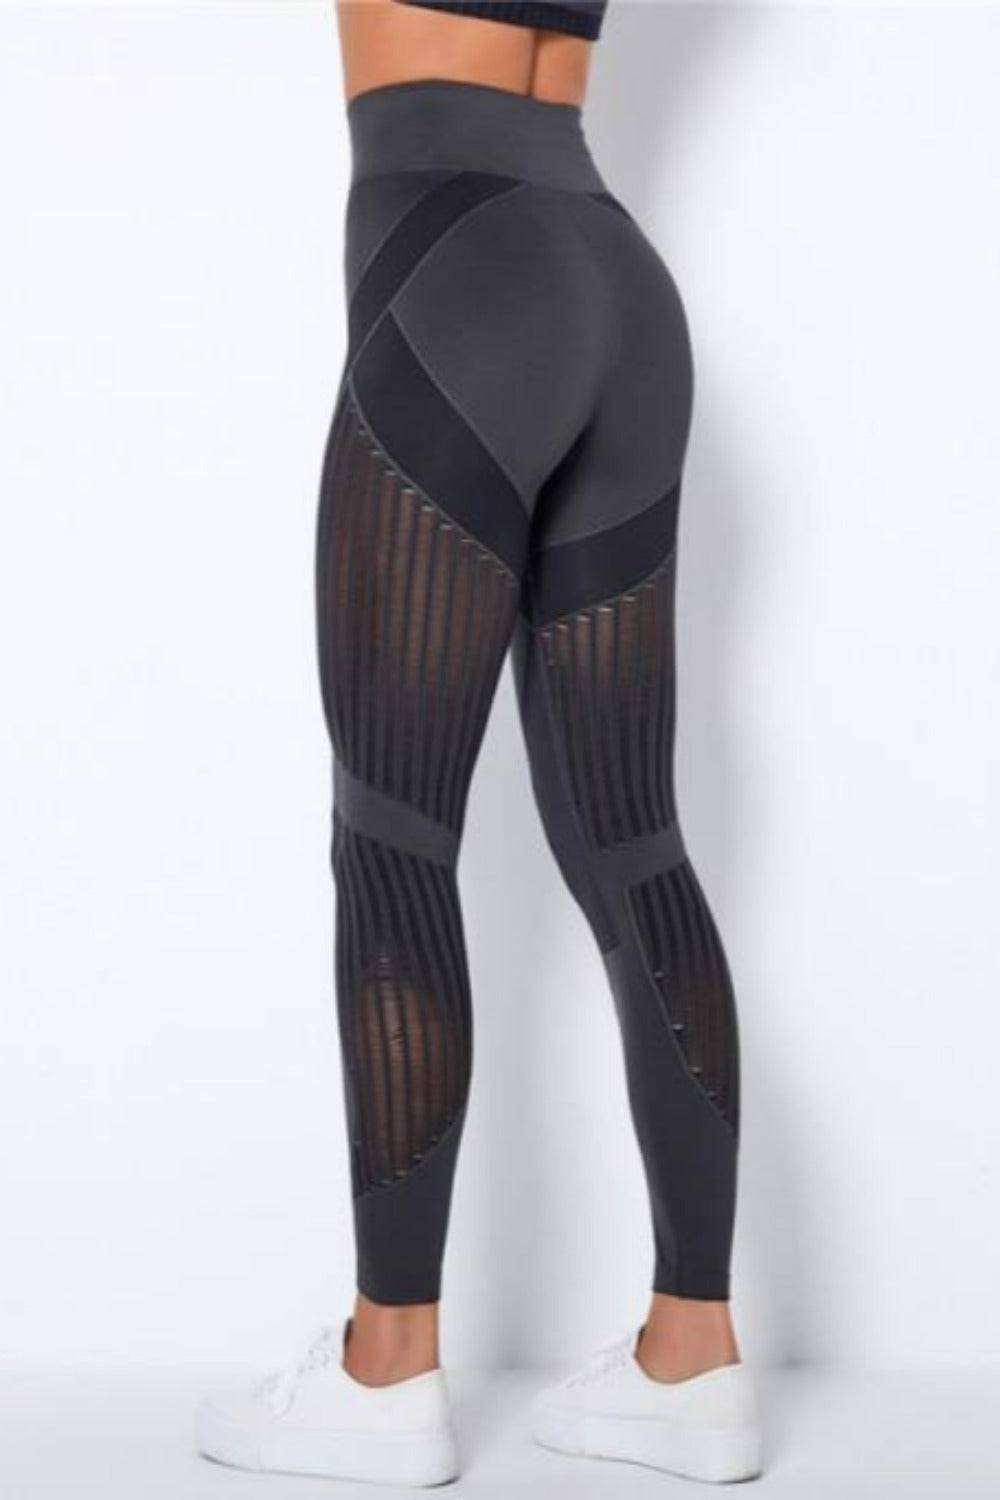 Tummy Control High Waist Seamless Sport Yoga Pants Leggings - Dark Gray - TGC Boutique - Yoga Leggings